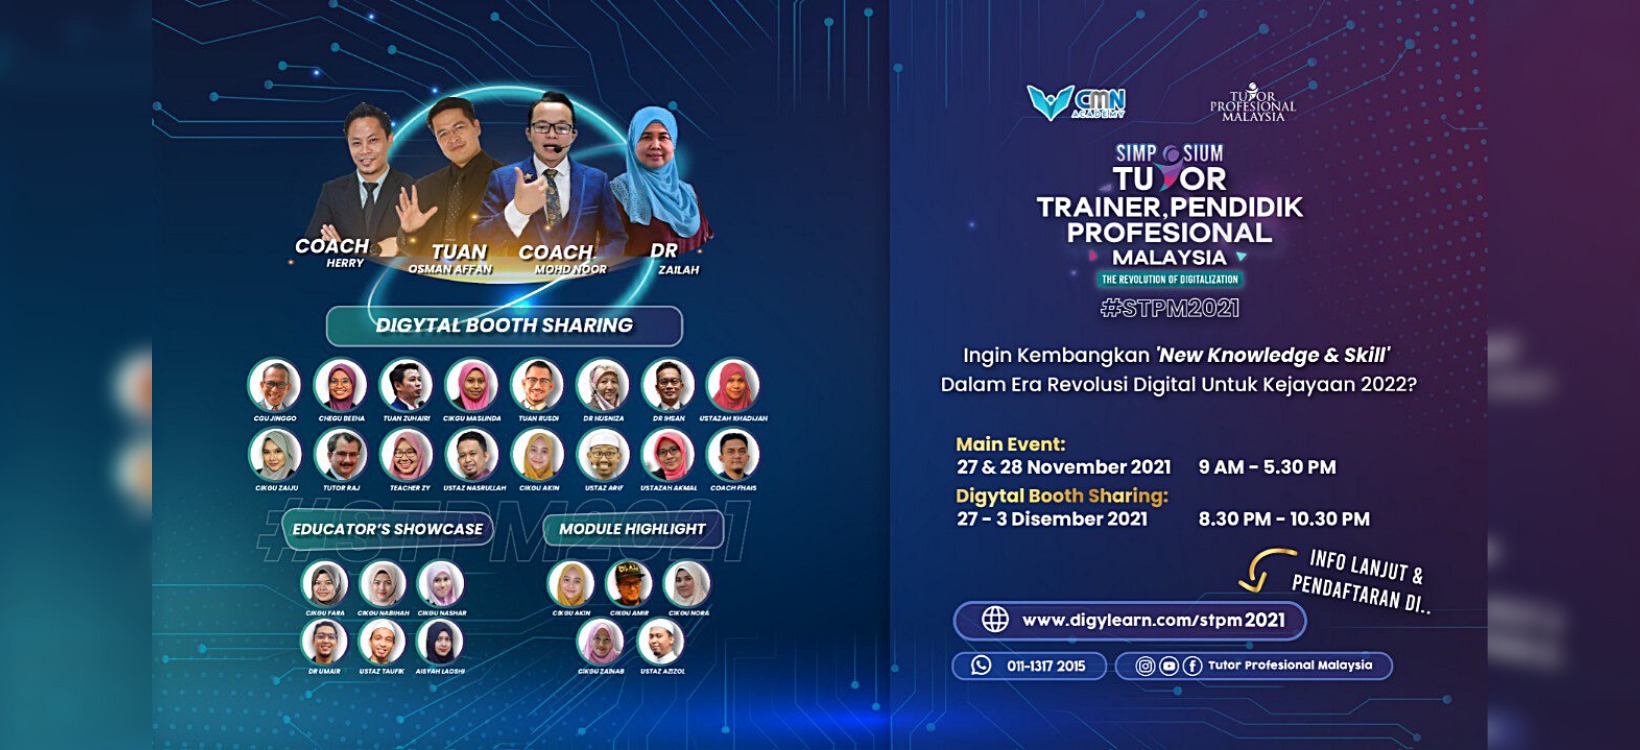 E-workbook ‘Simposium Tutor, Trainer, Pendidik Profesional Malaysia’ (STPM2021)